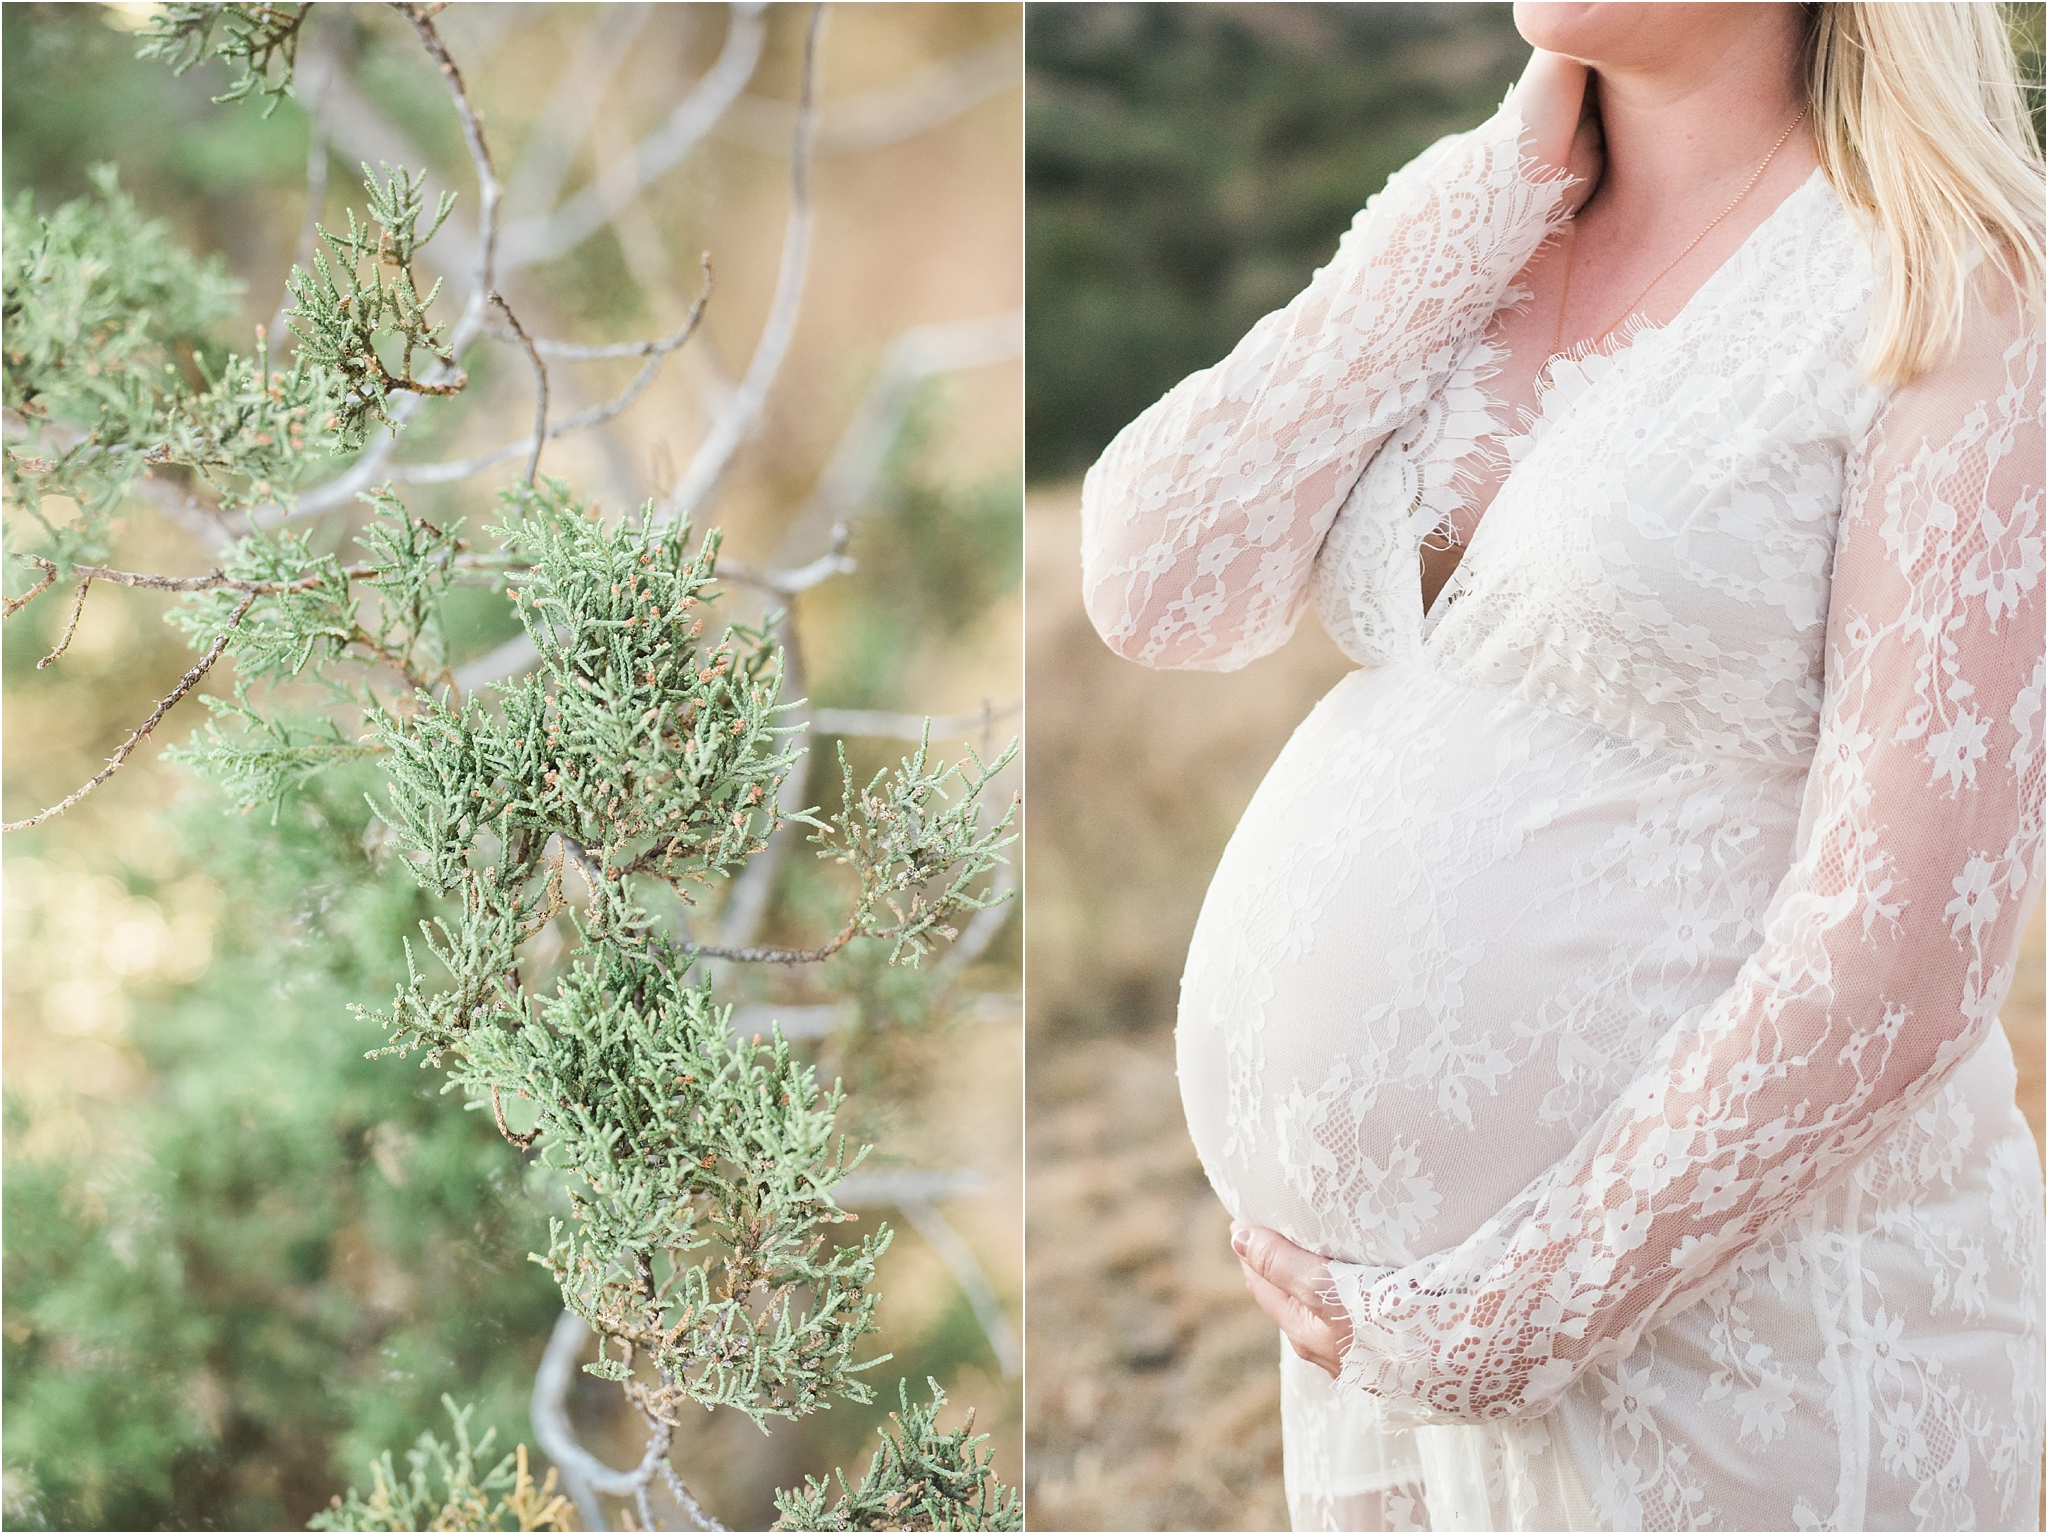 Tucson maternity photographer